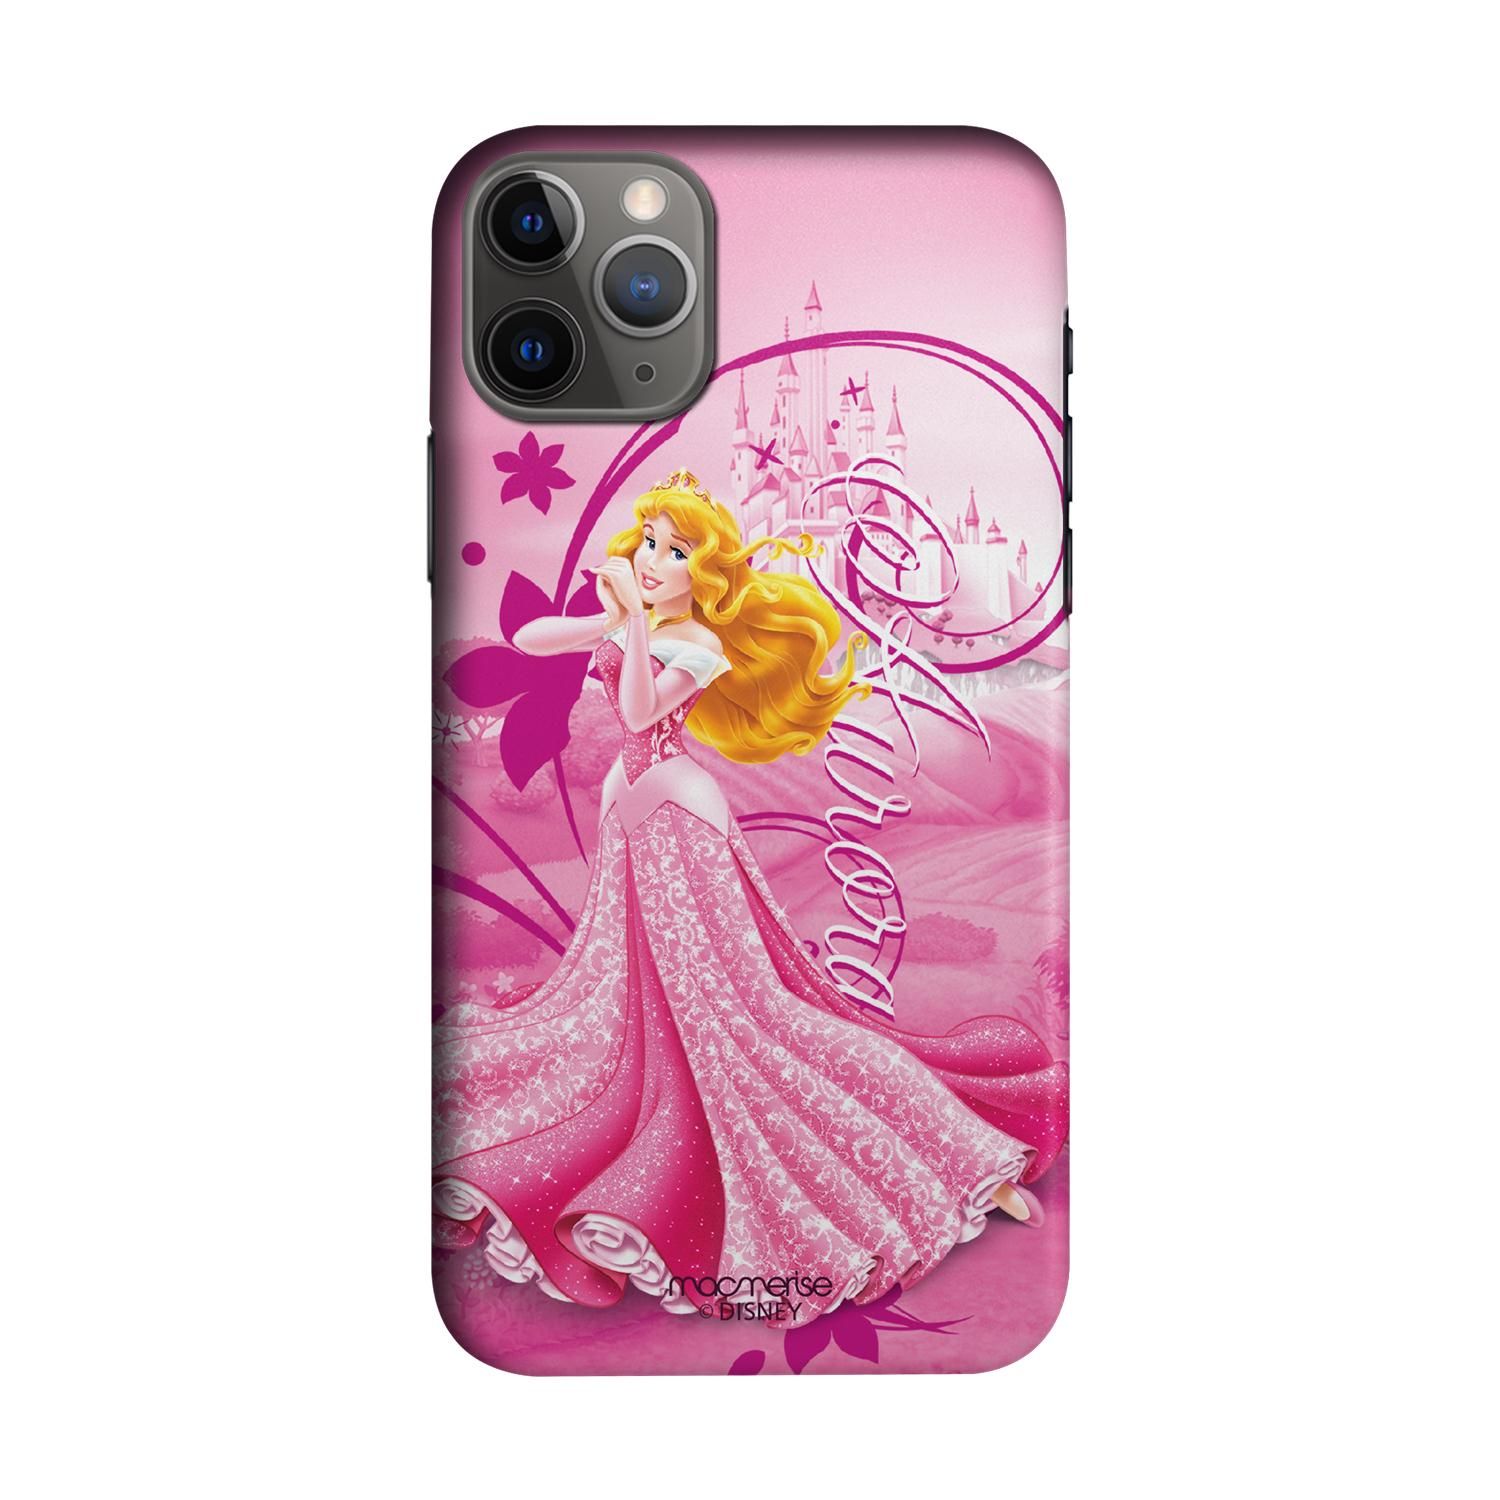 Buy Aurora - Sleek Phone Case for iPhone 11 Pro Max Online